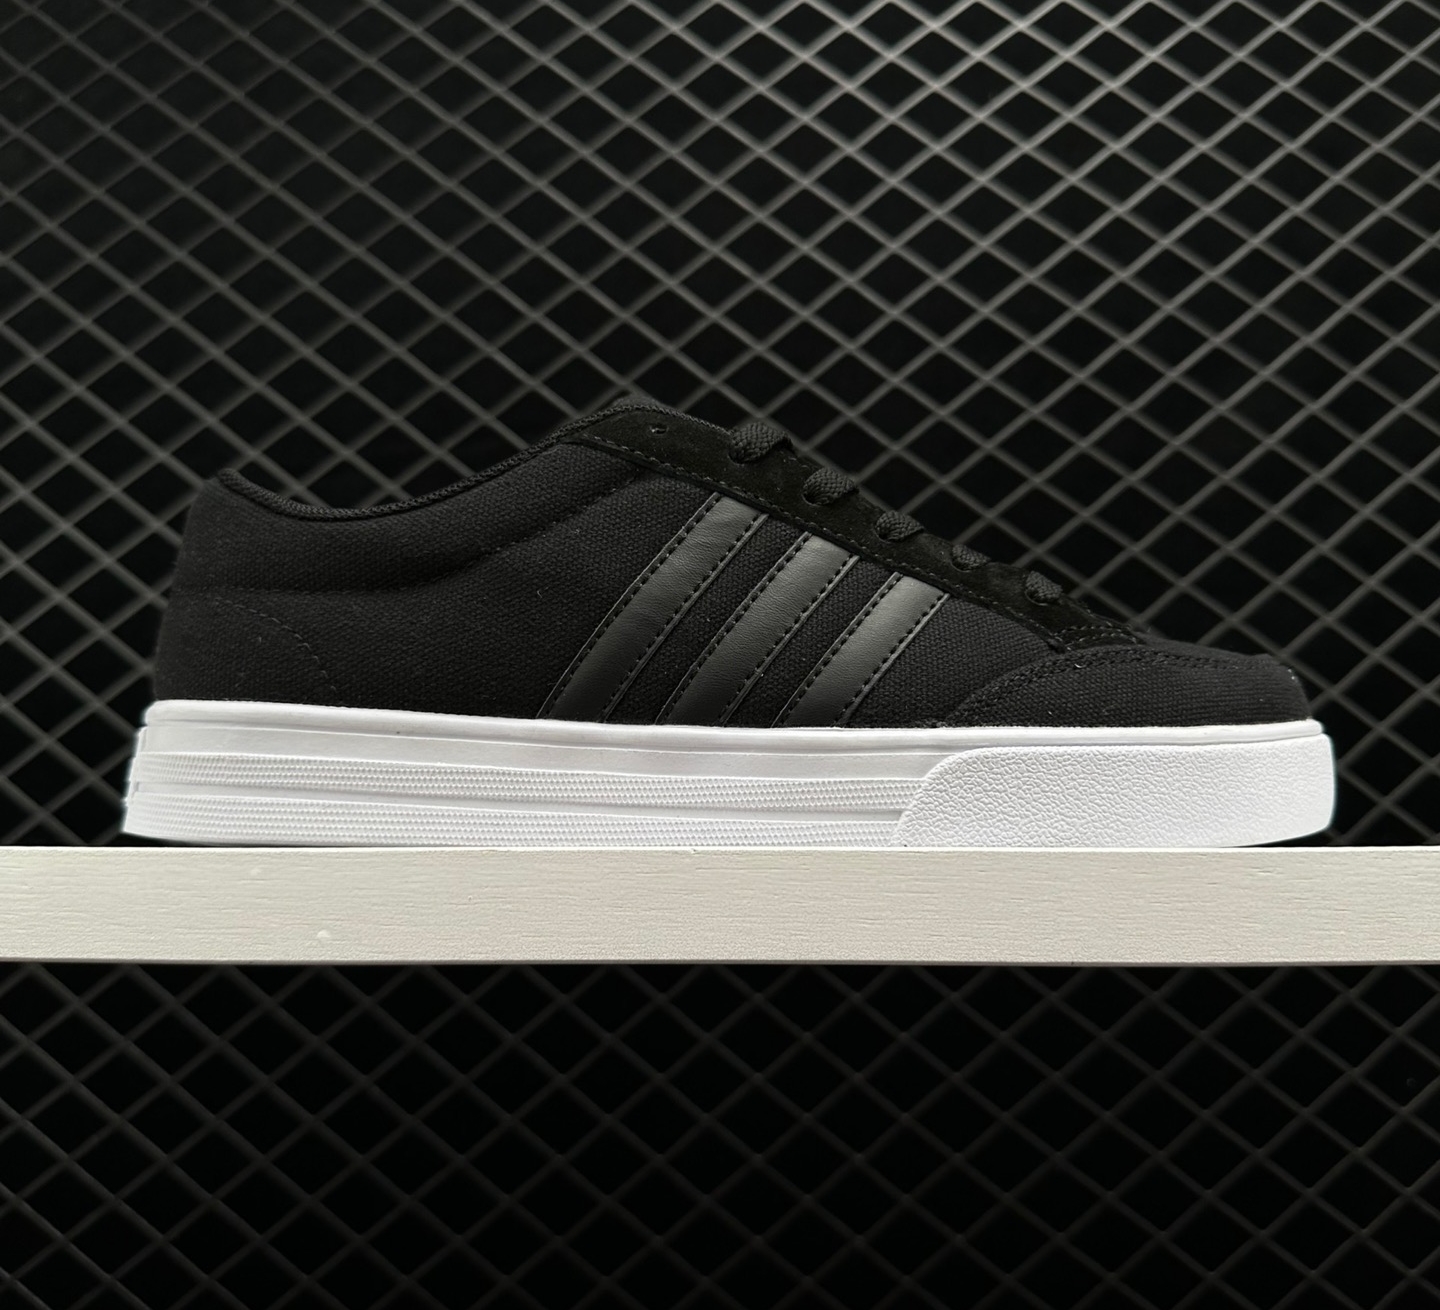 Adidas Neo Vs Set 'Black Gray' DB0092 - Stylish and Versatile Sneakers